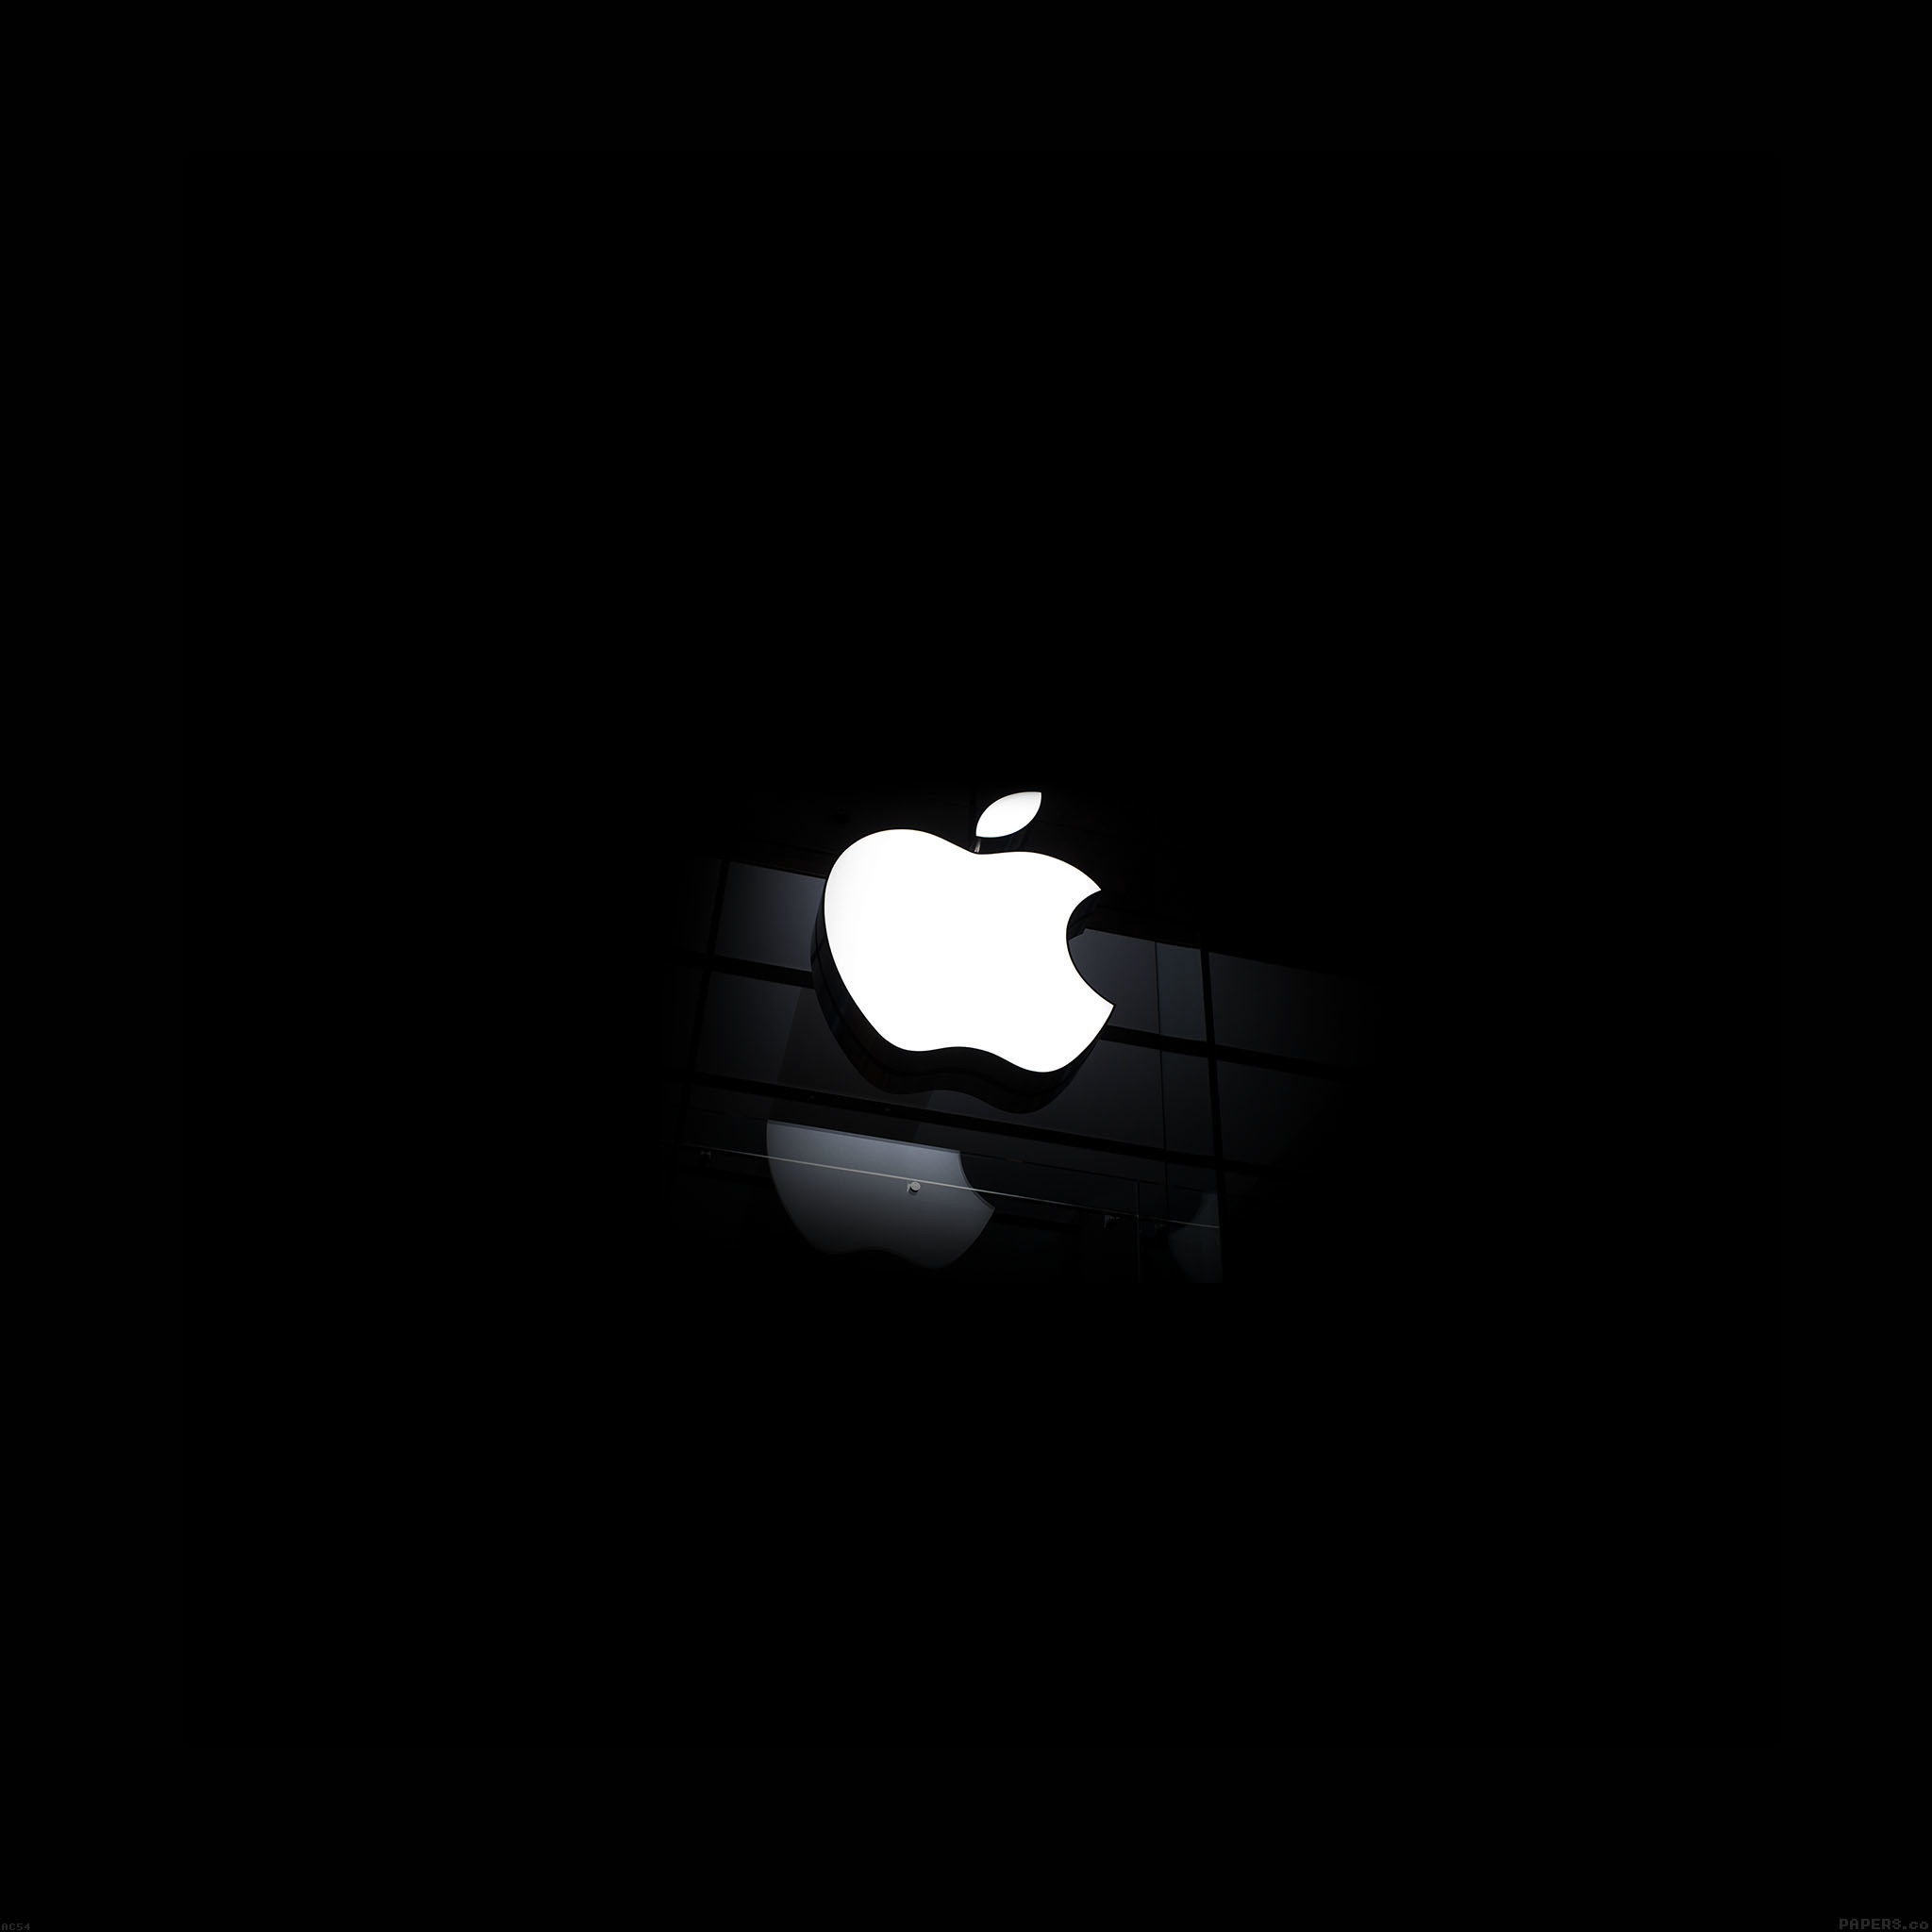 2048x2048 Fantasy : White Apple Glass Logo Dark Iphone 6 Brands In Building Icon In  Dark Night Background HD Wallpaper Apple Logo Wallpaper For IPhone Apple  Logo Text ...